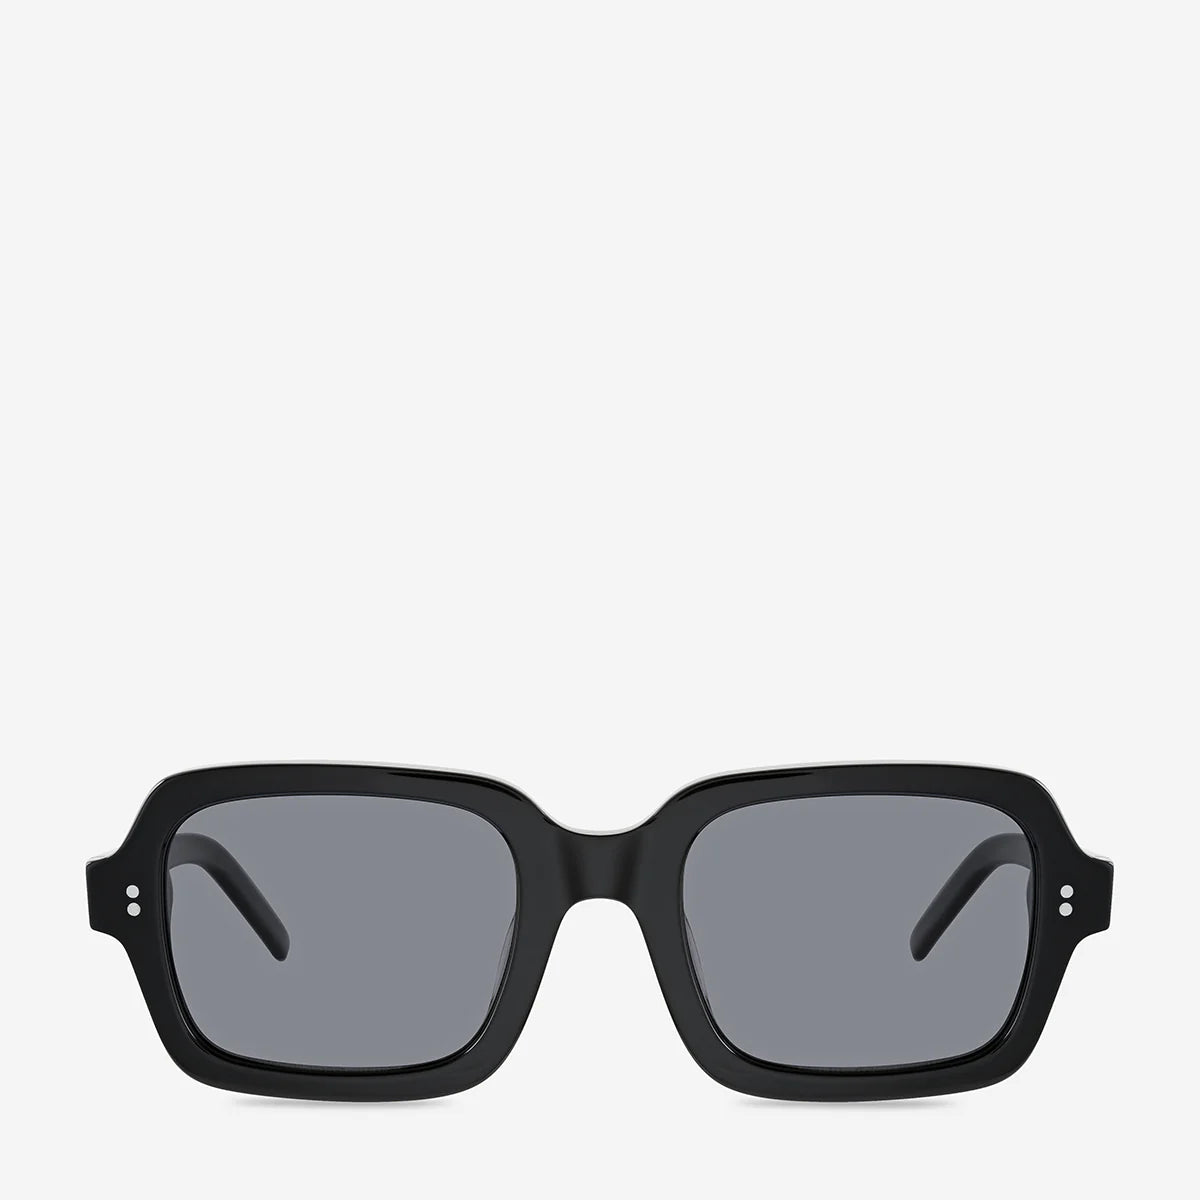 Status Anxiety Sunglasses Vacation - Black